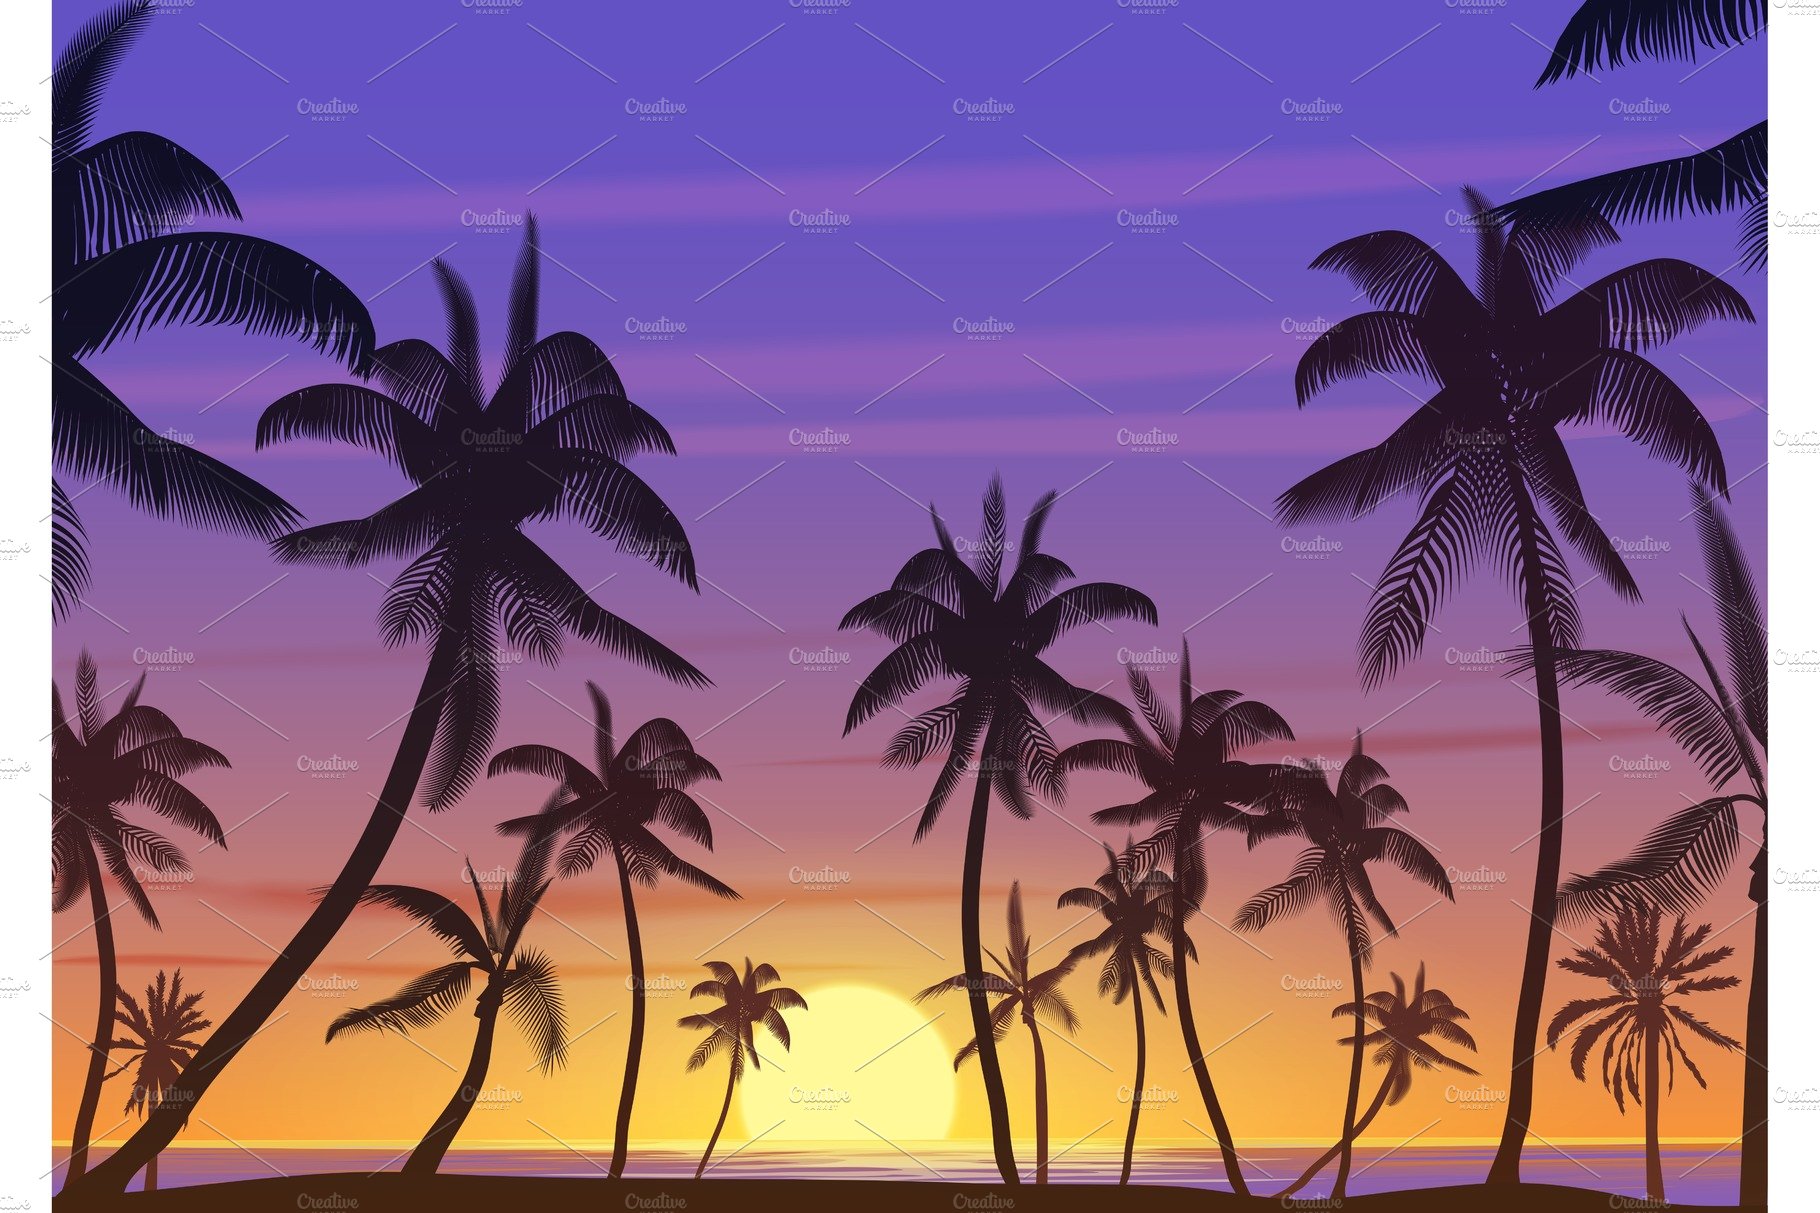 Palm coconut trees sunset landscape cover image.